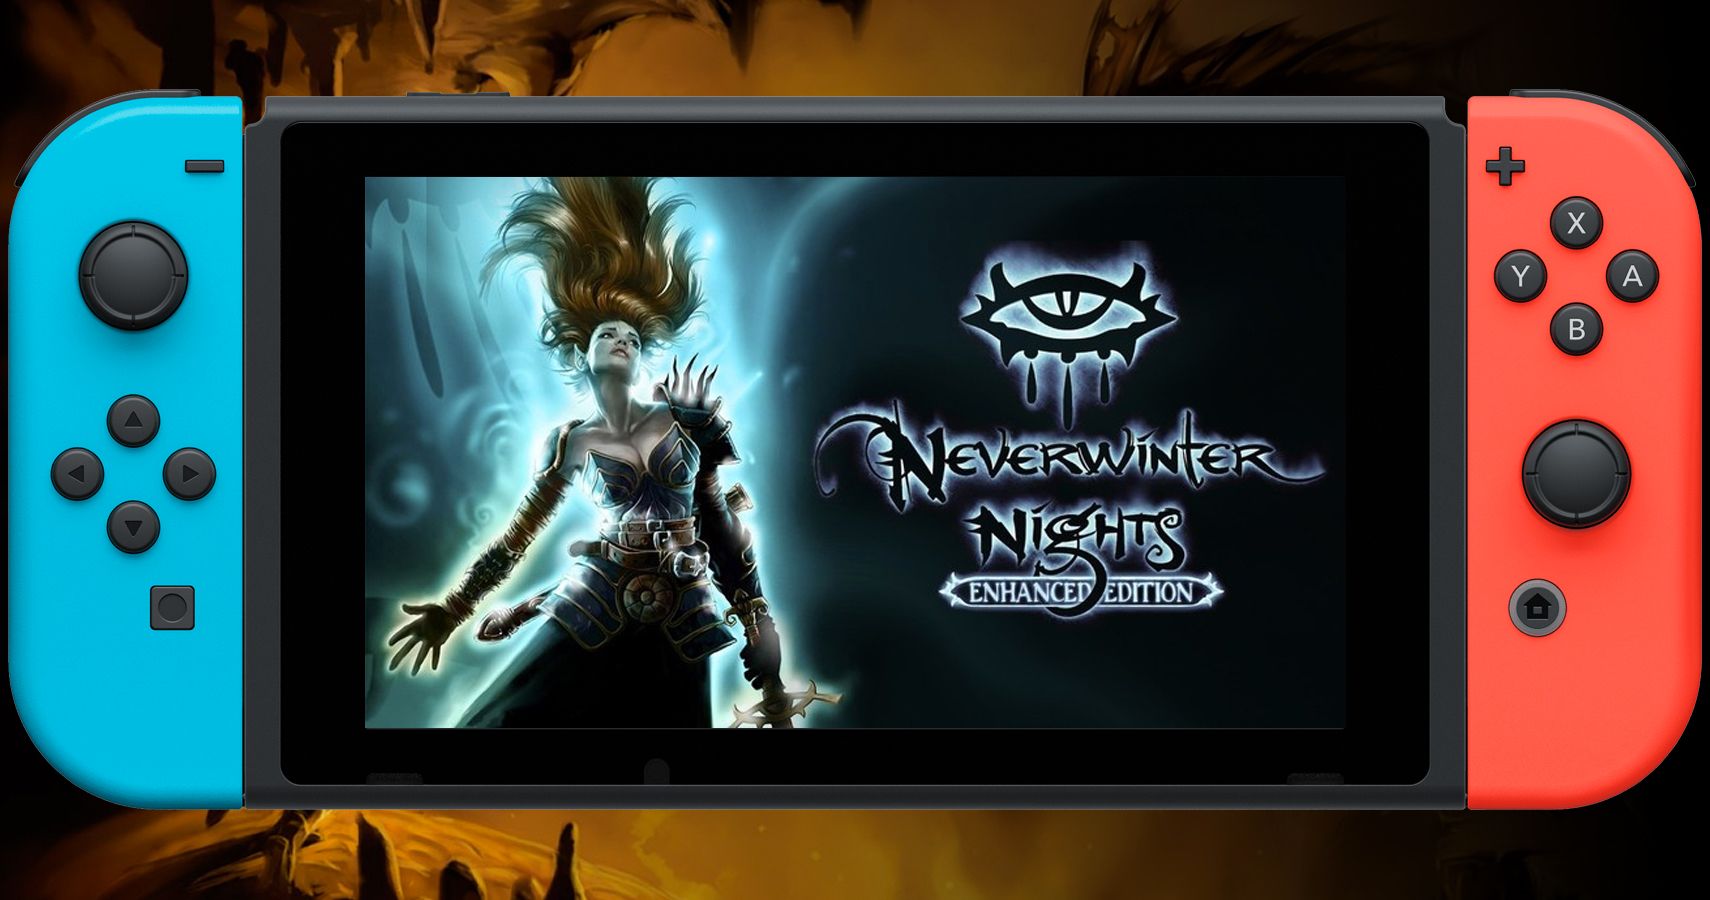 Rolls Neverwinter Consoles Enhanced Edition Finally Nights: Onto